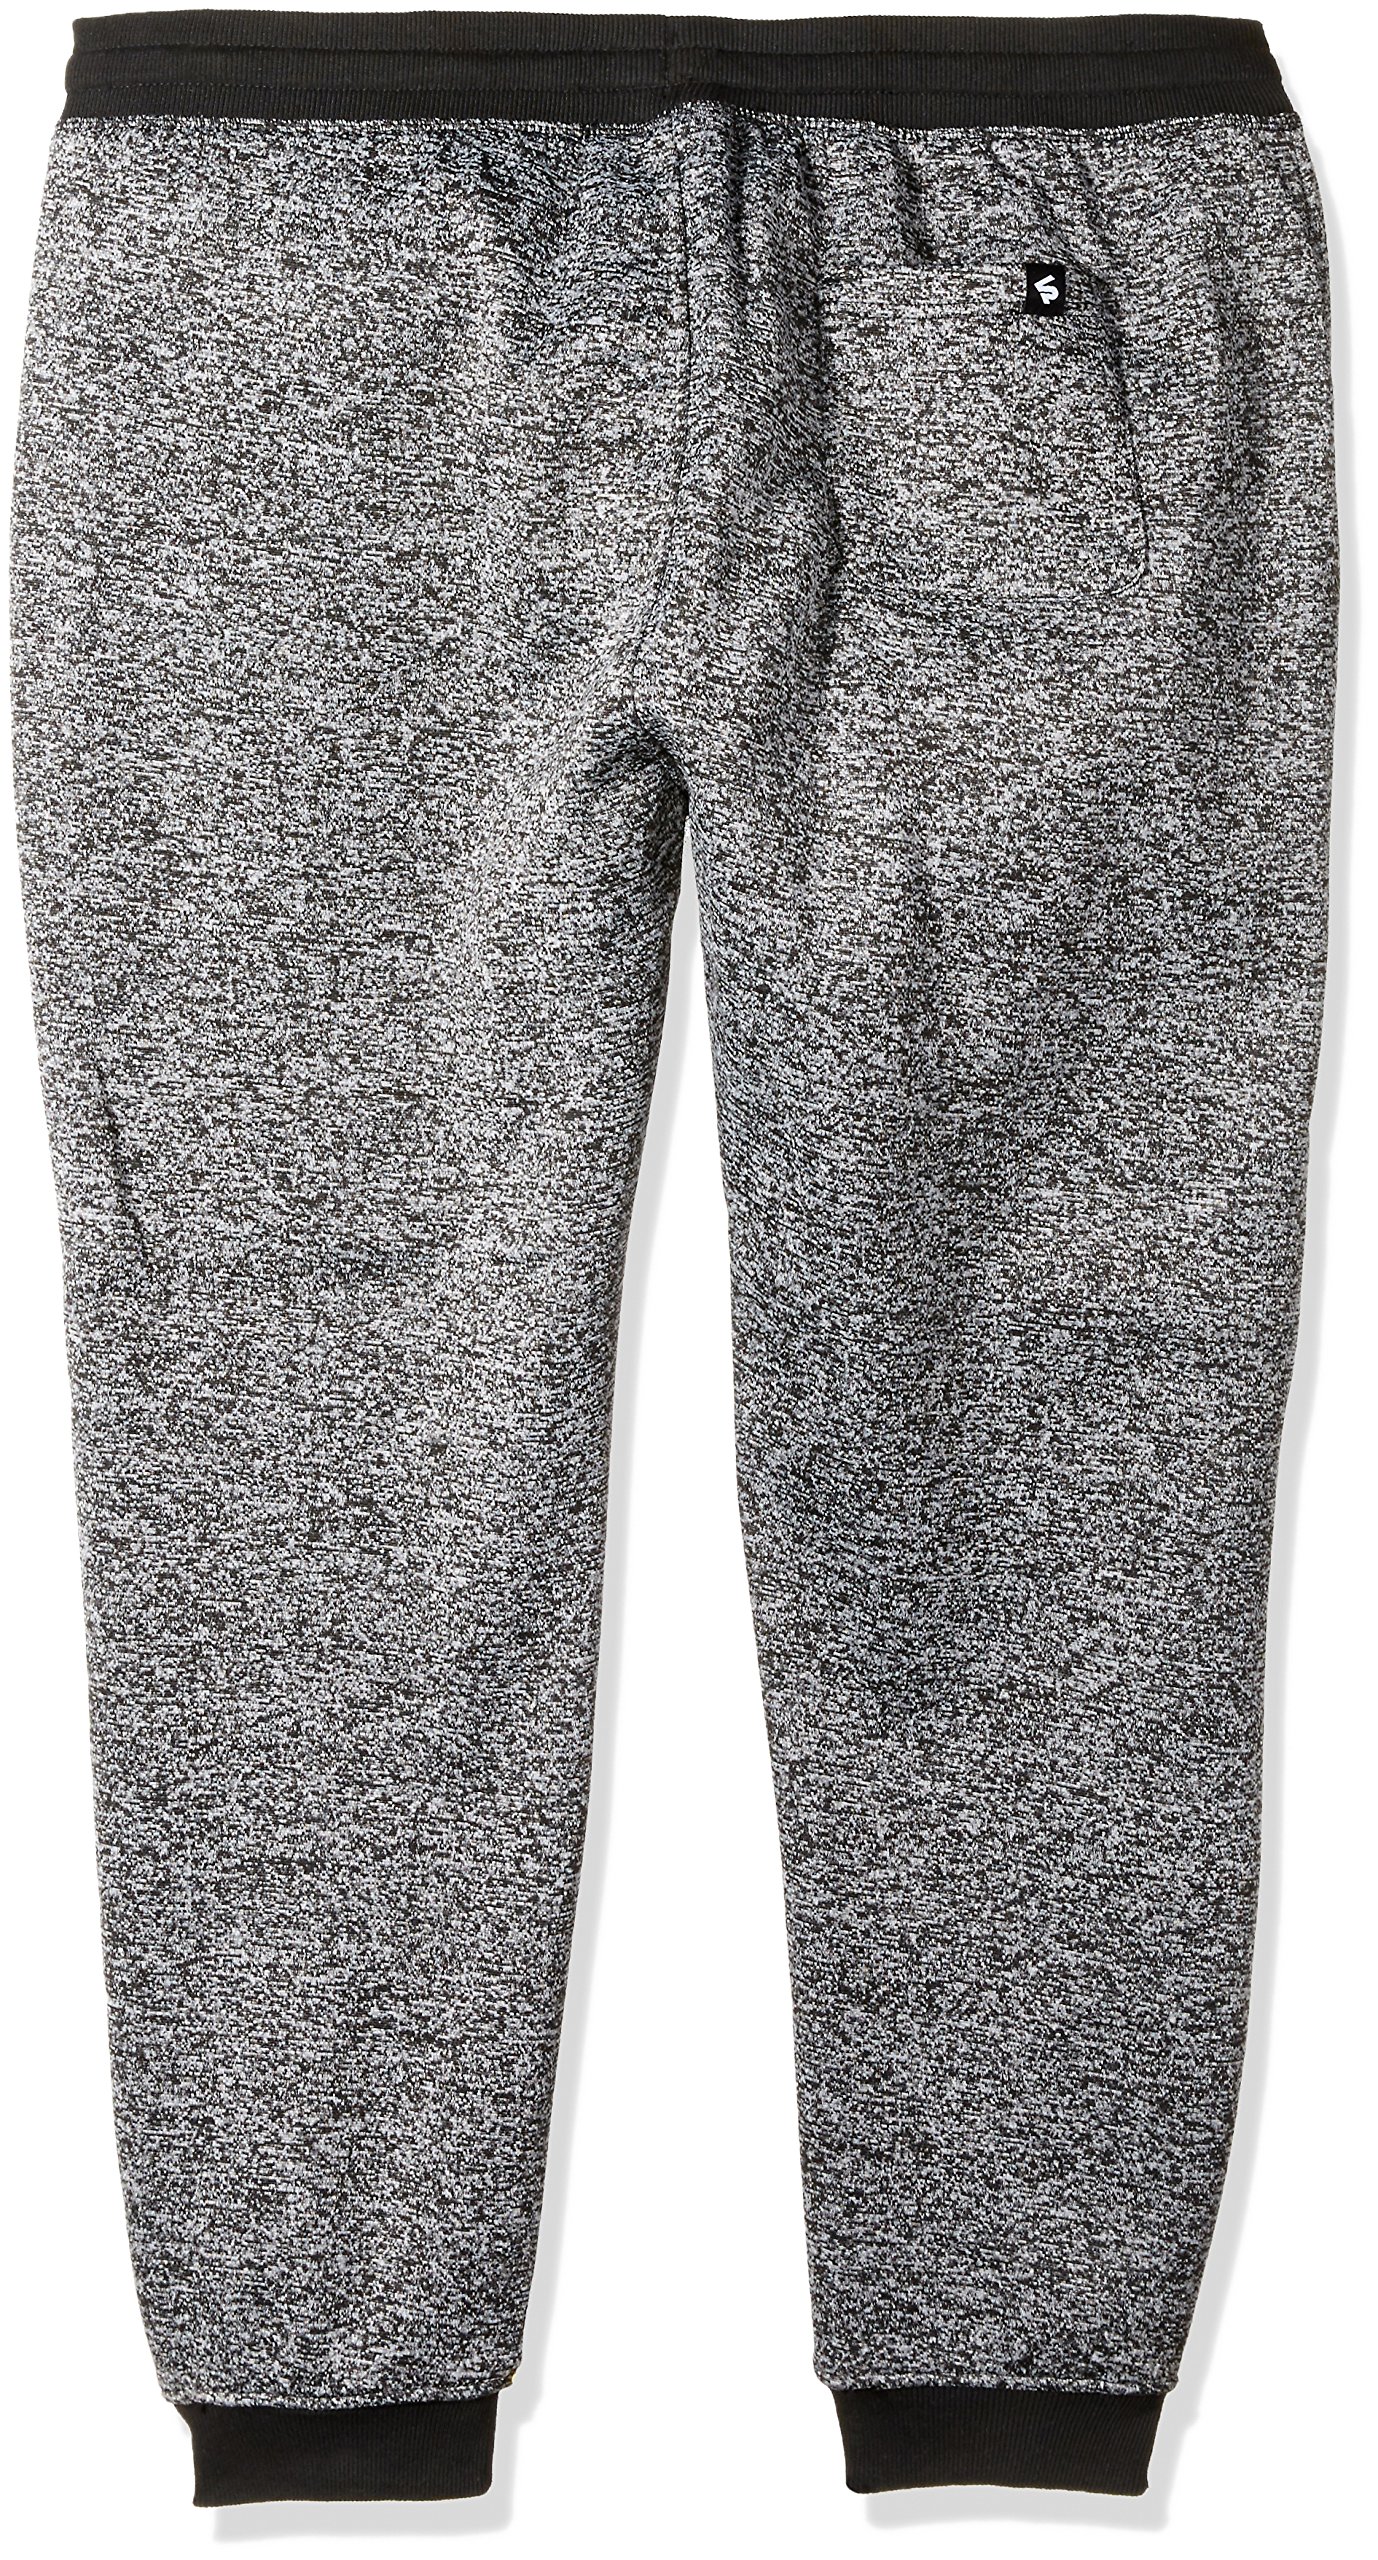 Southpole Men's Marled Fleece Sweatpants - Regular and Big & Tall Sizes